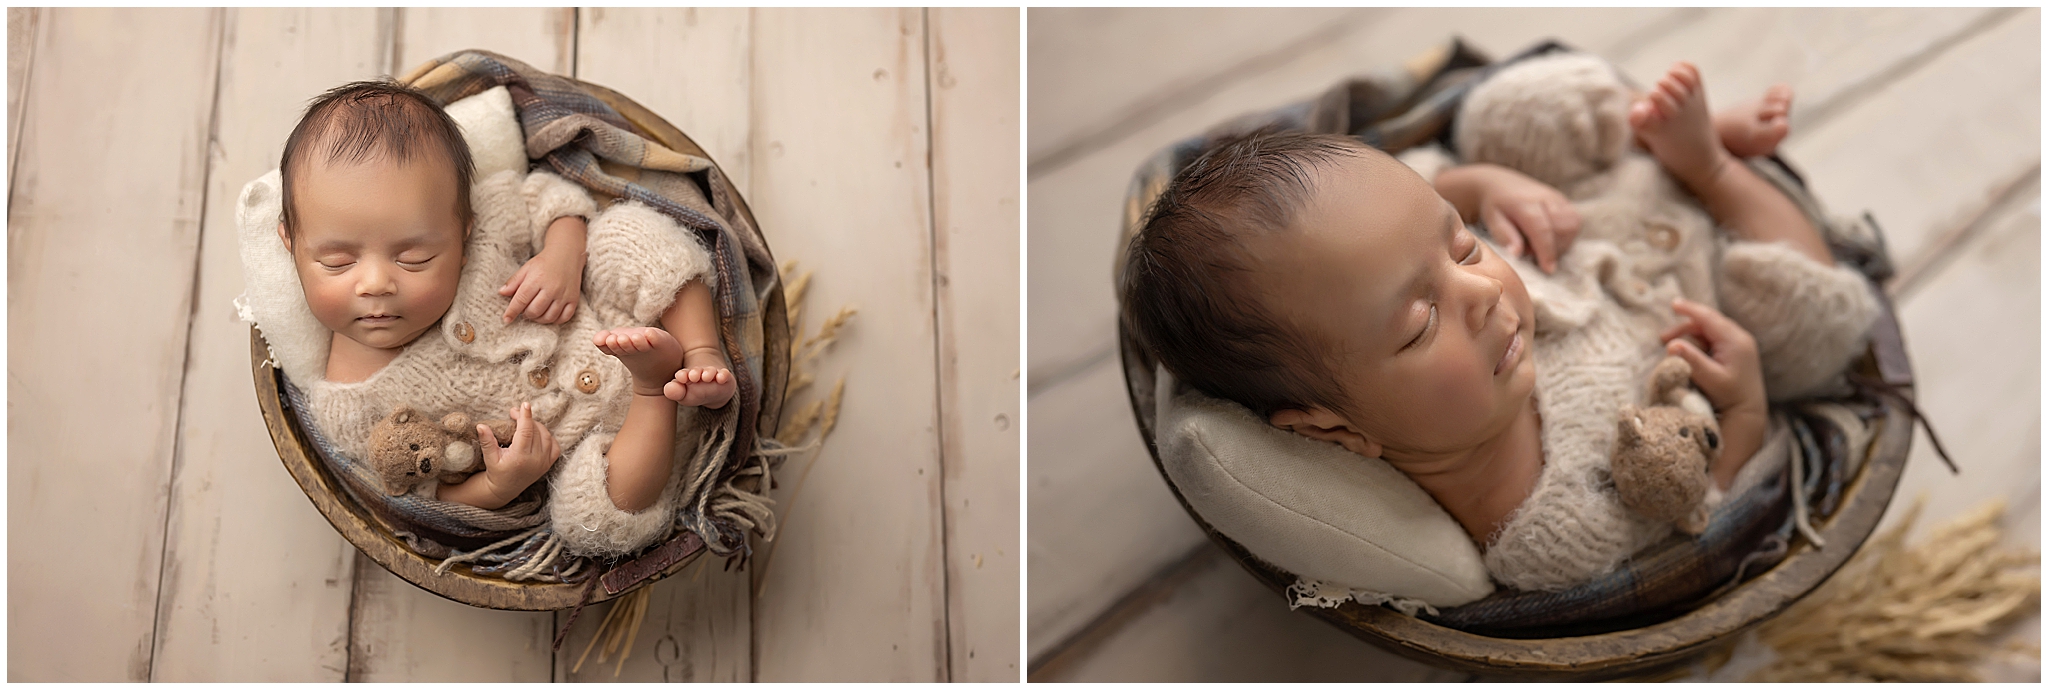 newborn baby sleeping in bowl  during newborn photography session at london ontario studio